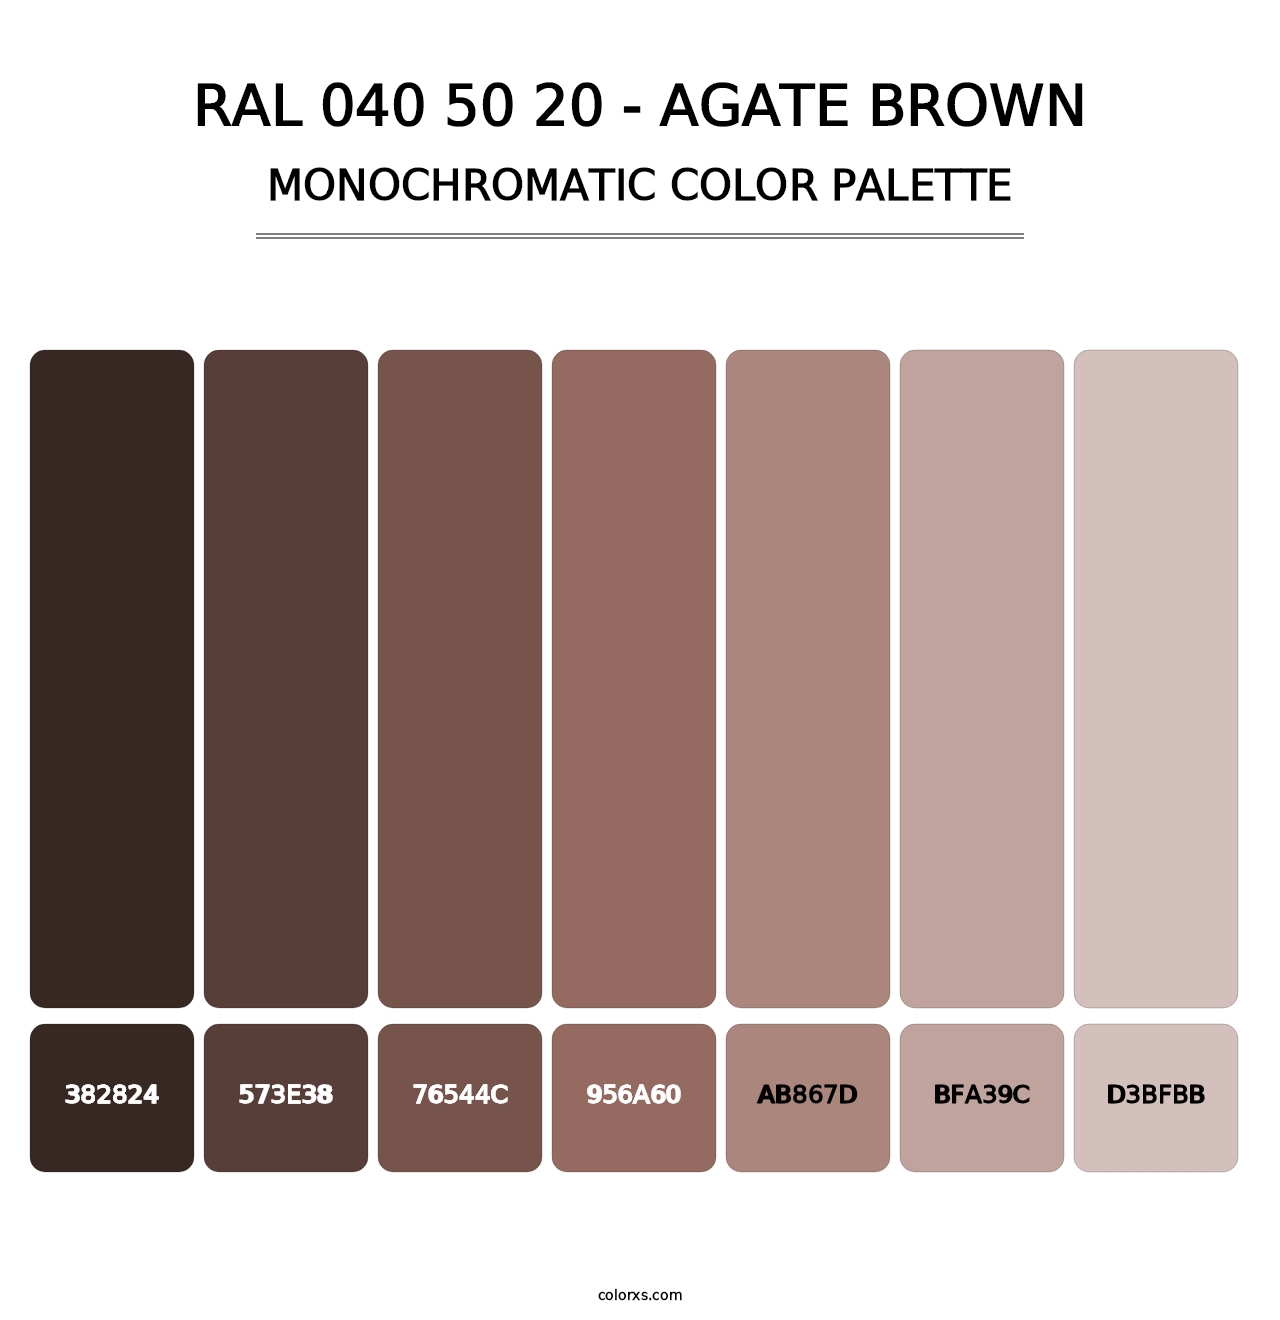 RAL 040 50 20 - Agate Brown - Monochromatic Color Palette